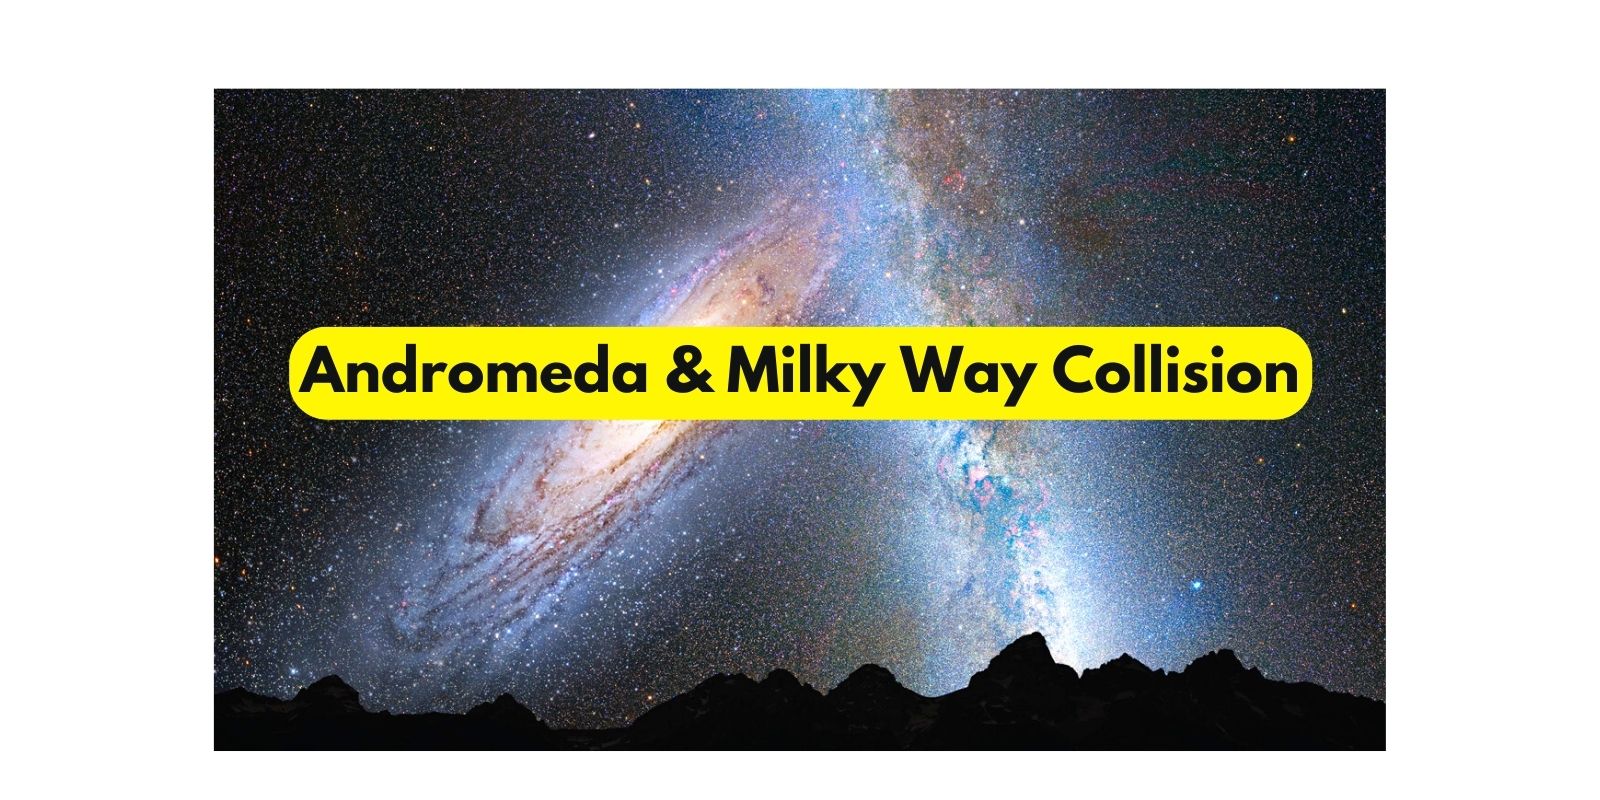 Andromeda & Milky Way Collision